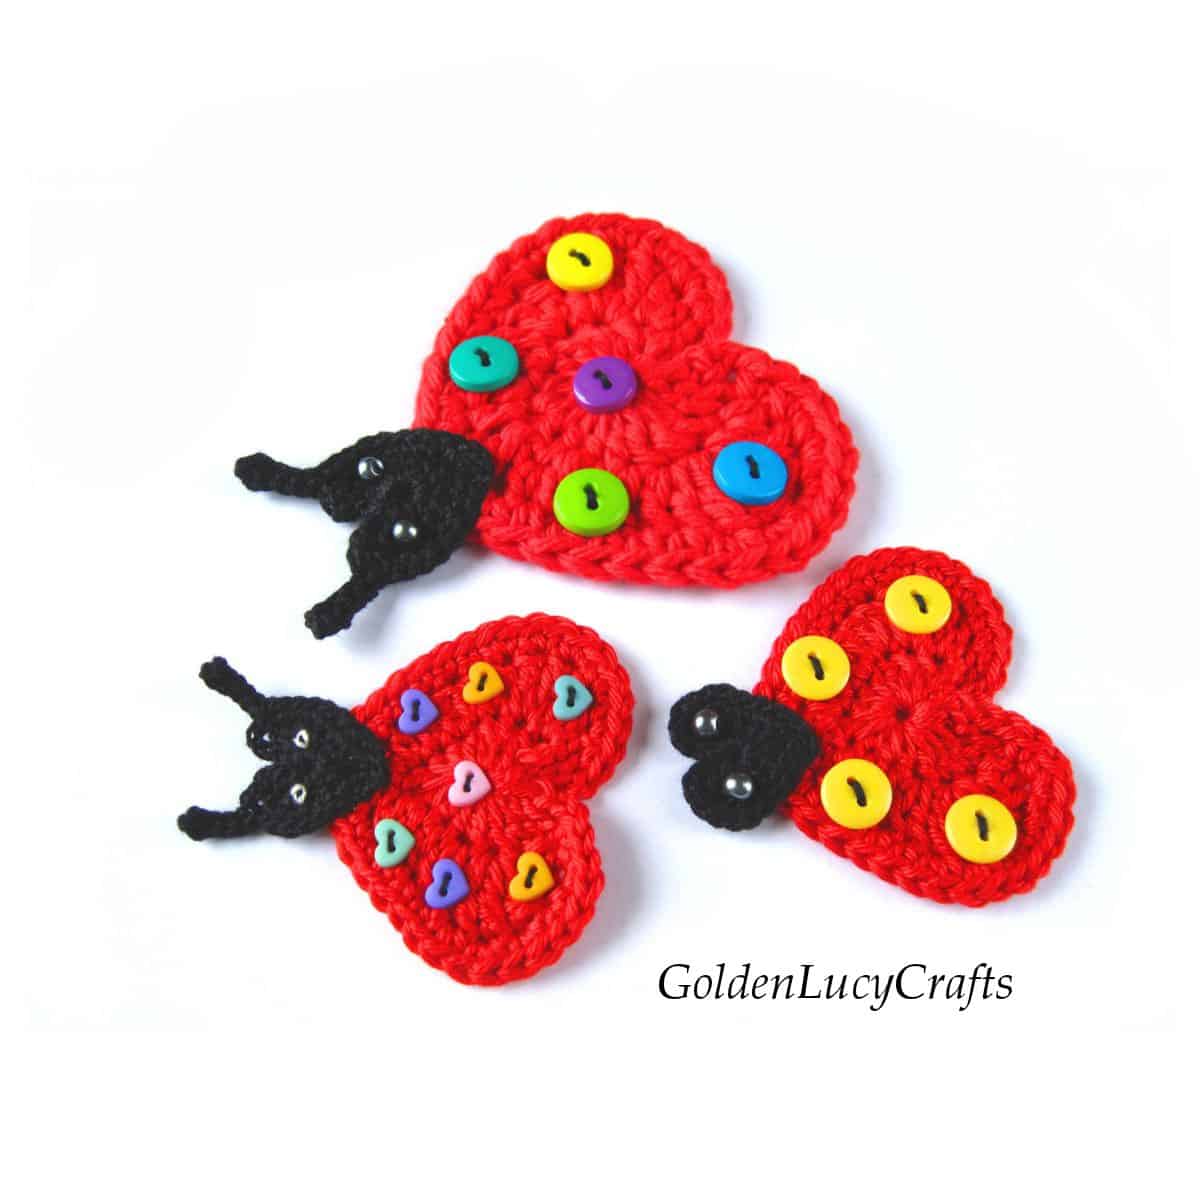 Three crocheted heart ladybugs.